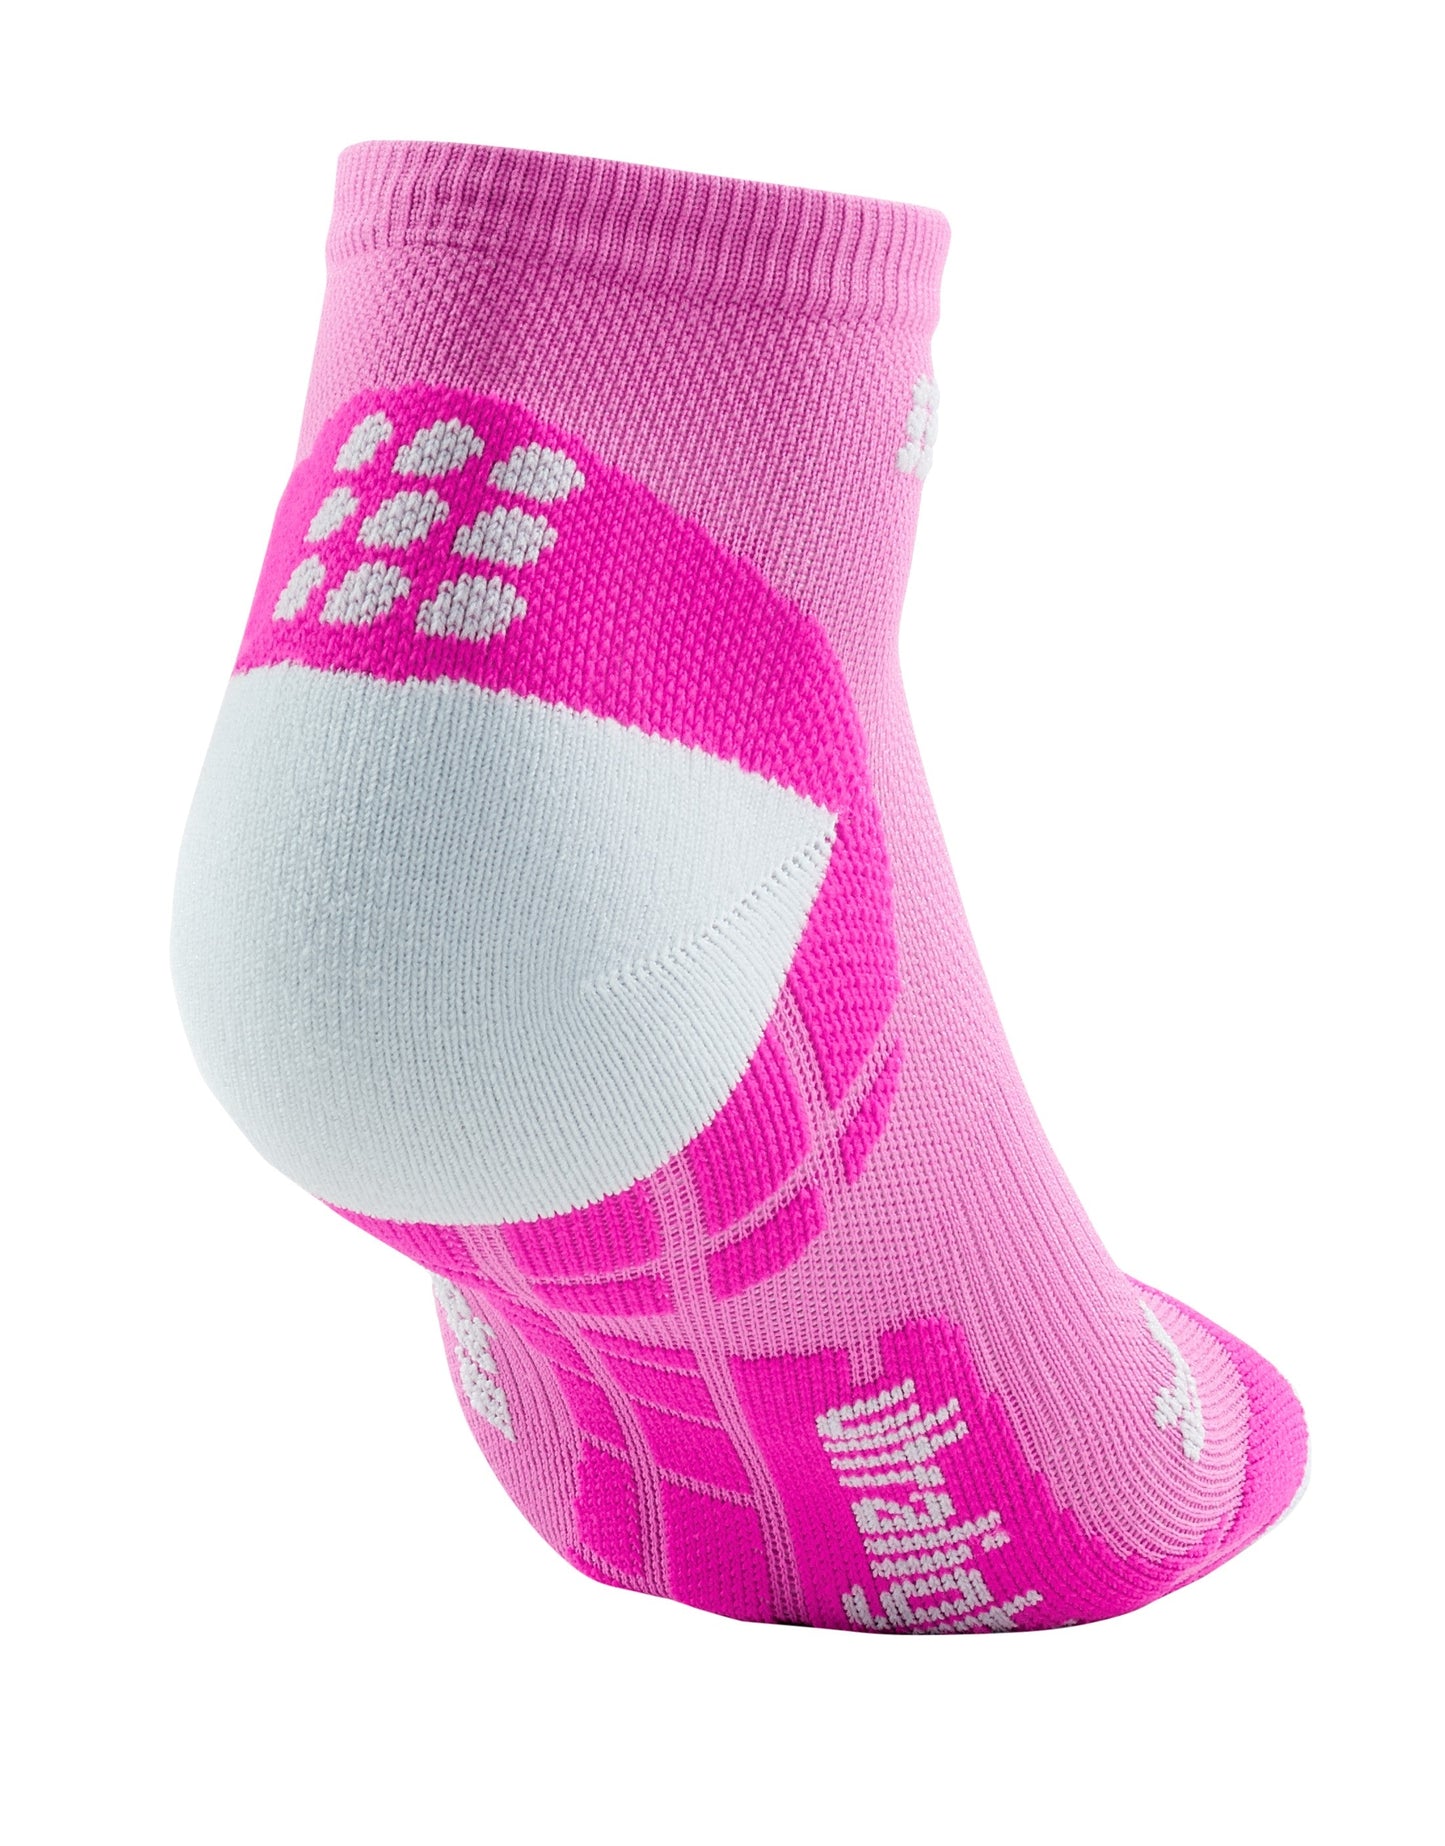 CEP Ultralight  Low Cut Compression Sock Women's - Pink / Light Gray